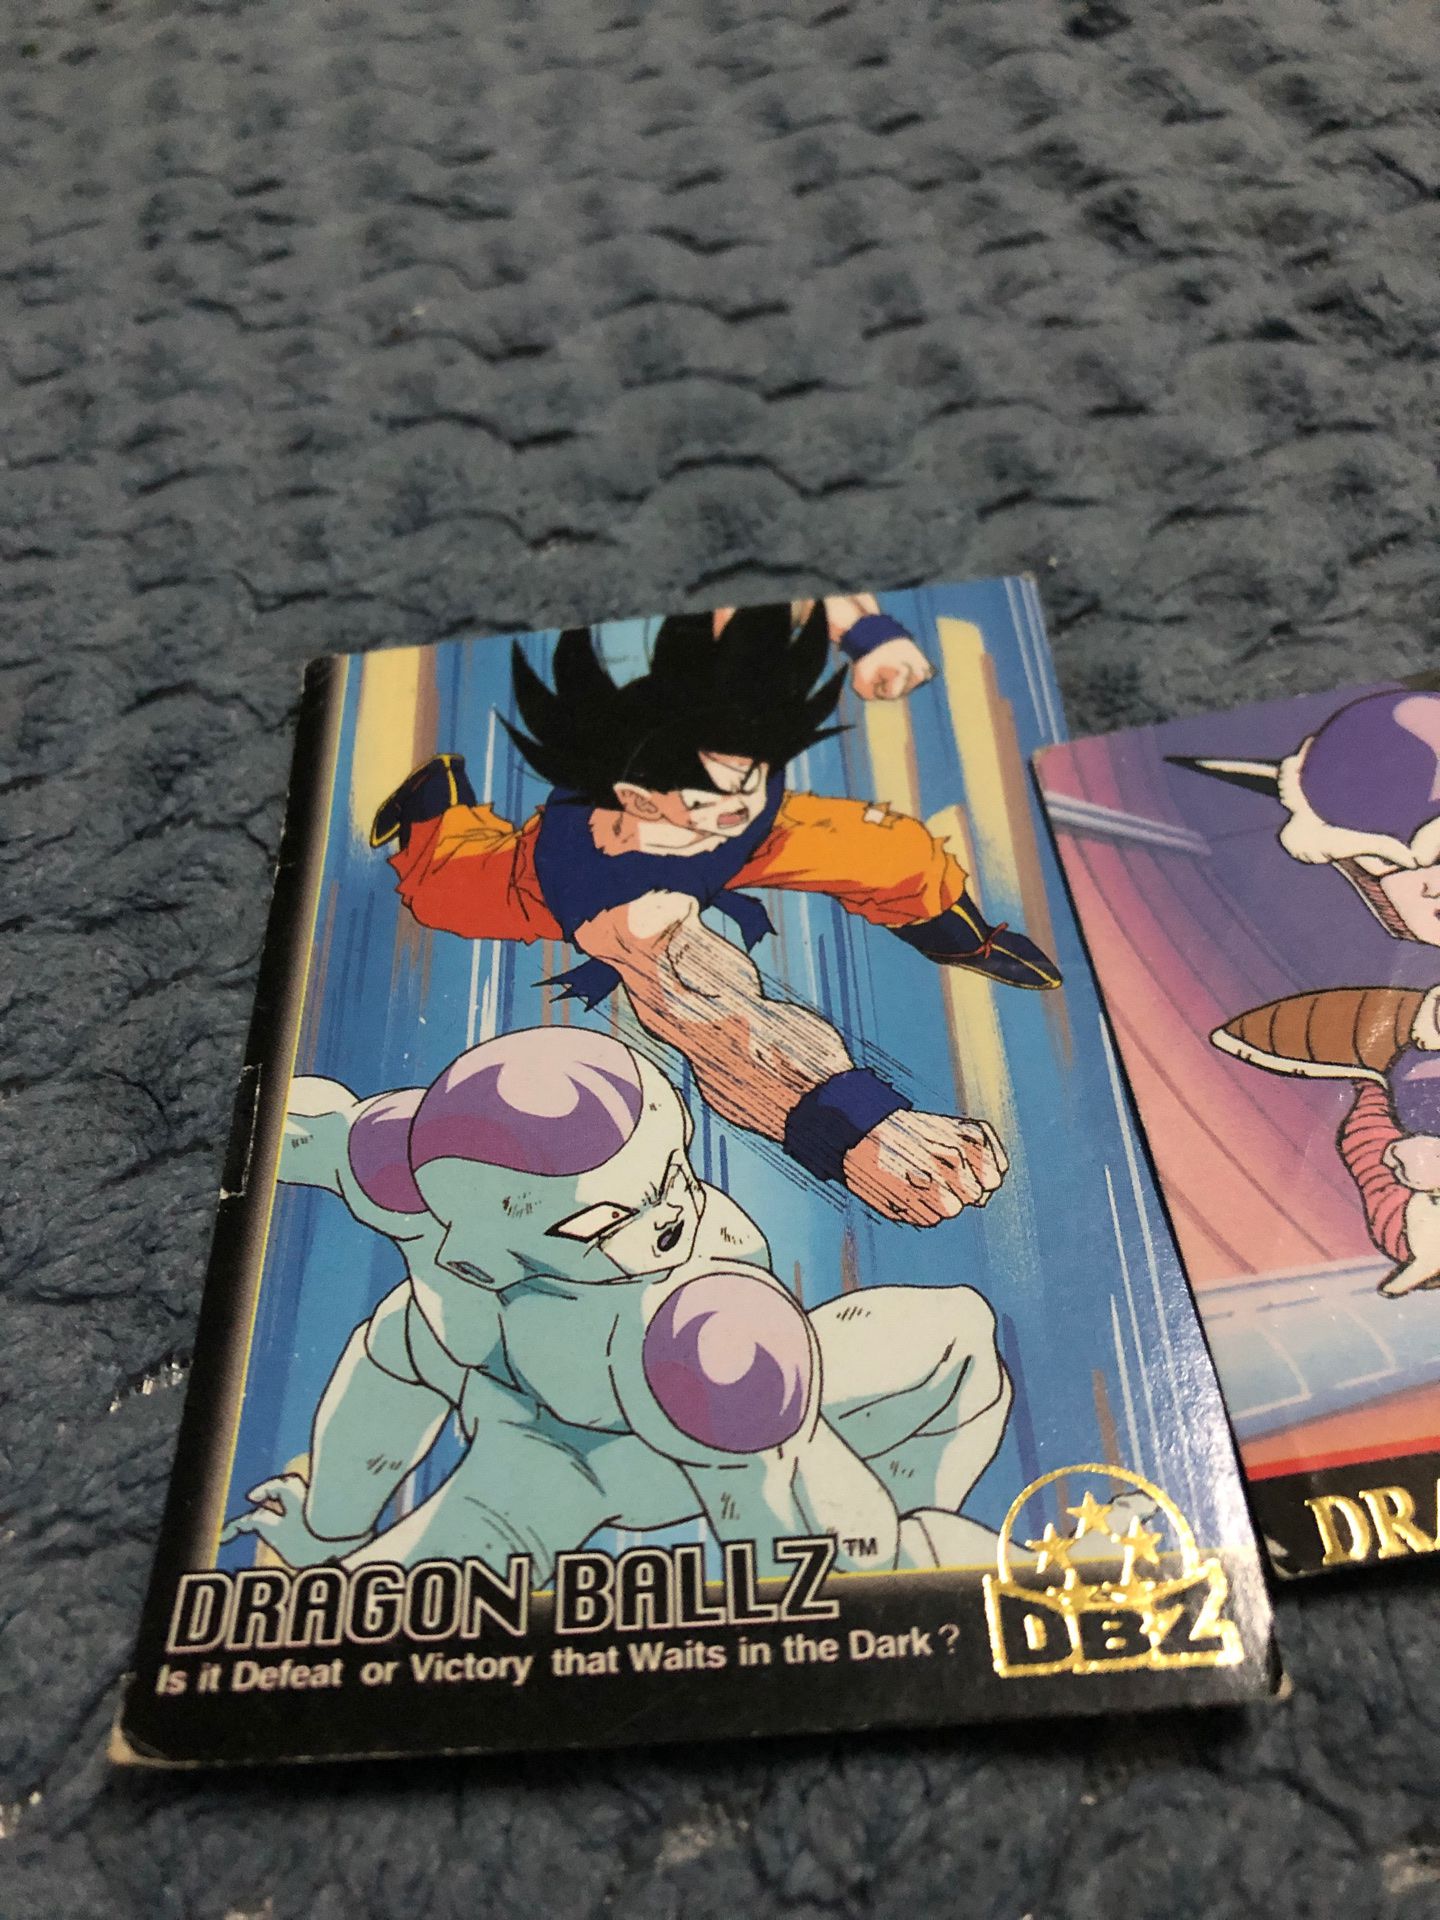 Dragon ball Z cards